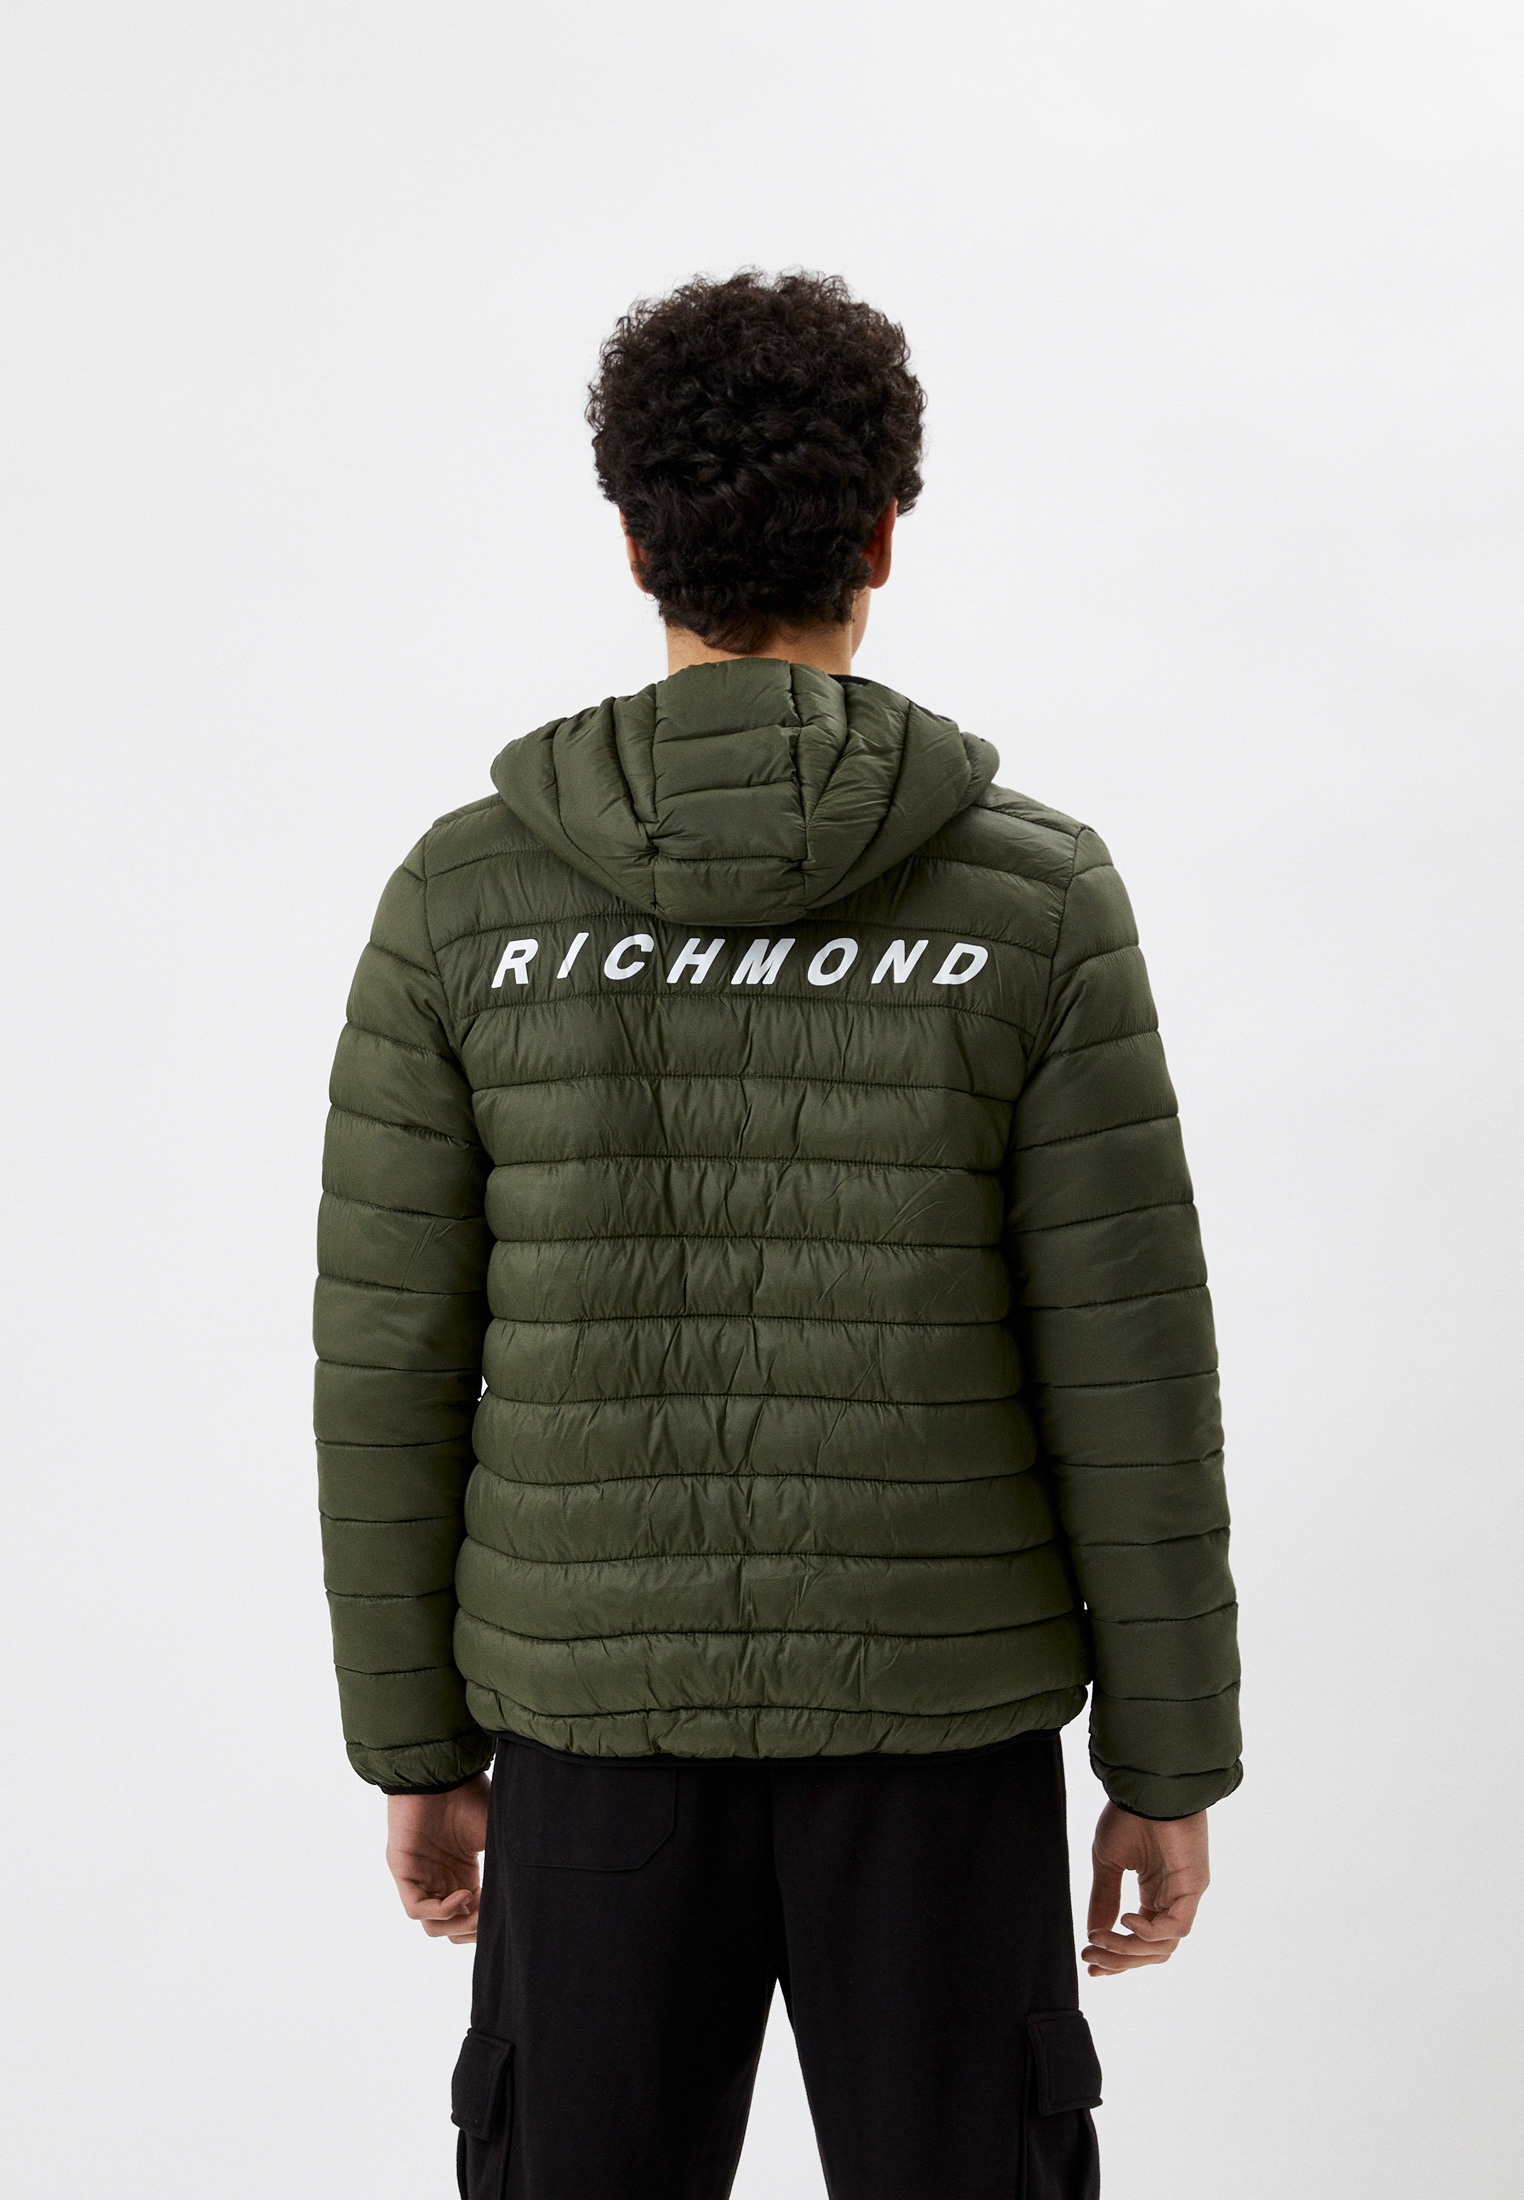 Richmond куртка HMA 23001pi. Куртка Richmond мужская. Пуховик Ричмонд мужские. Ричмонд куртка теплая мужские.